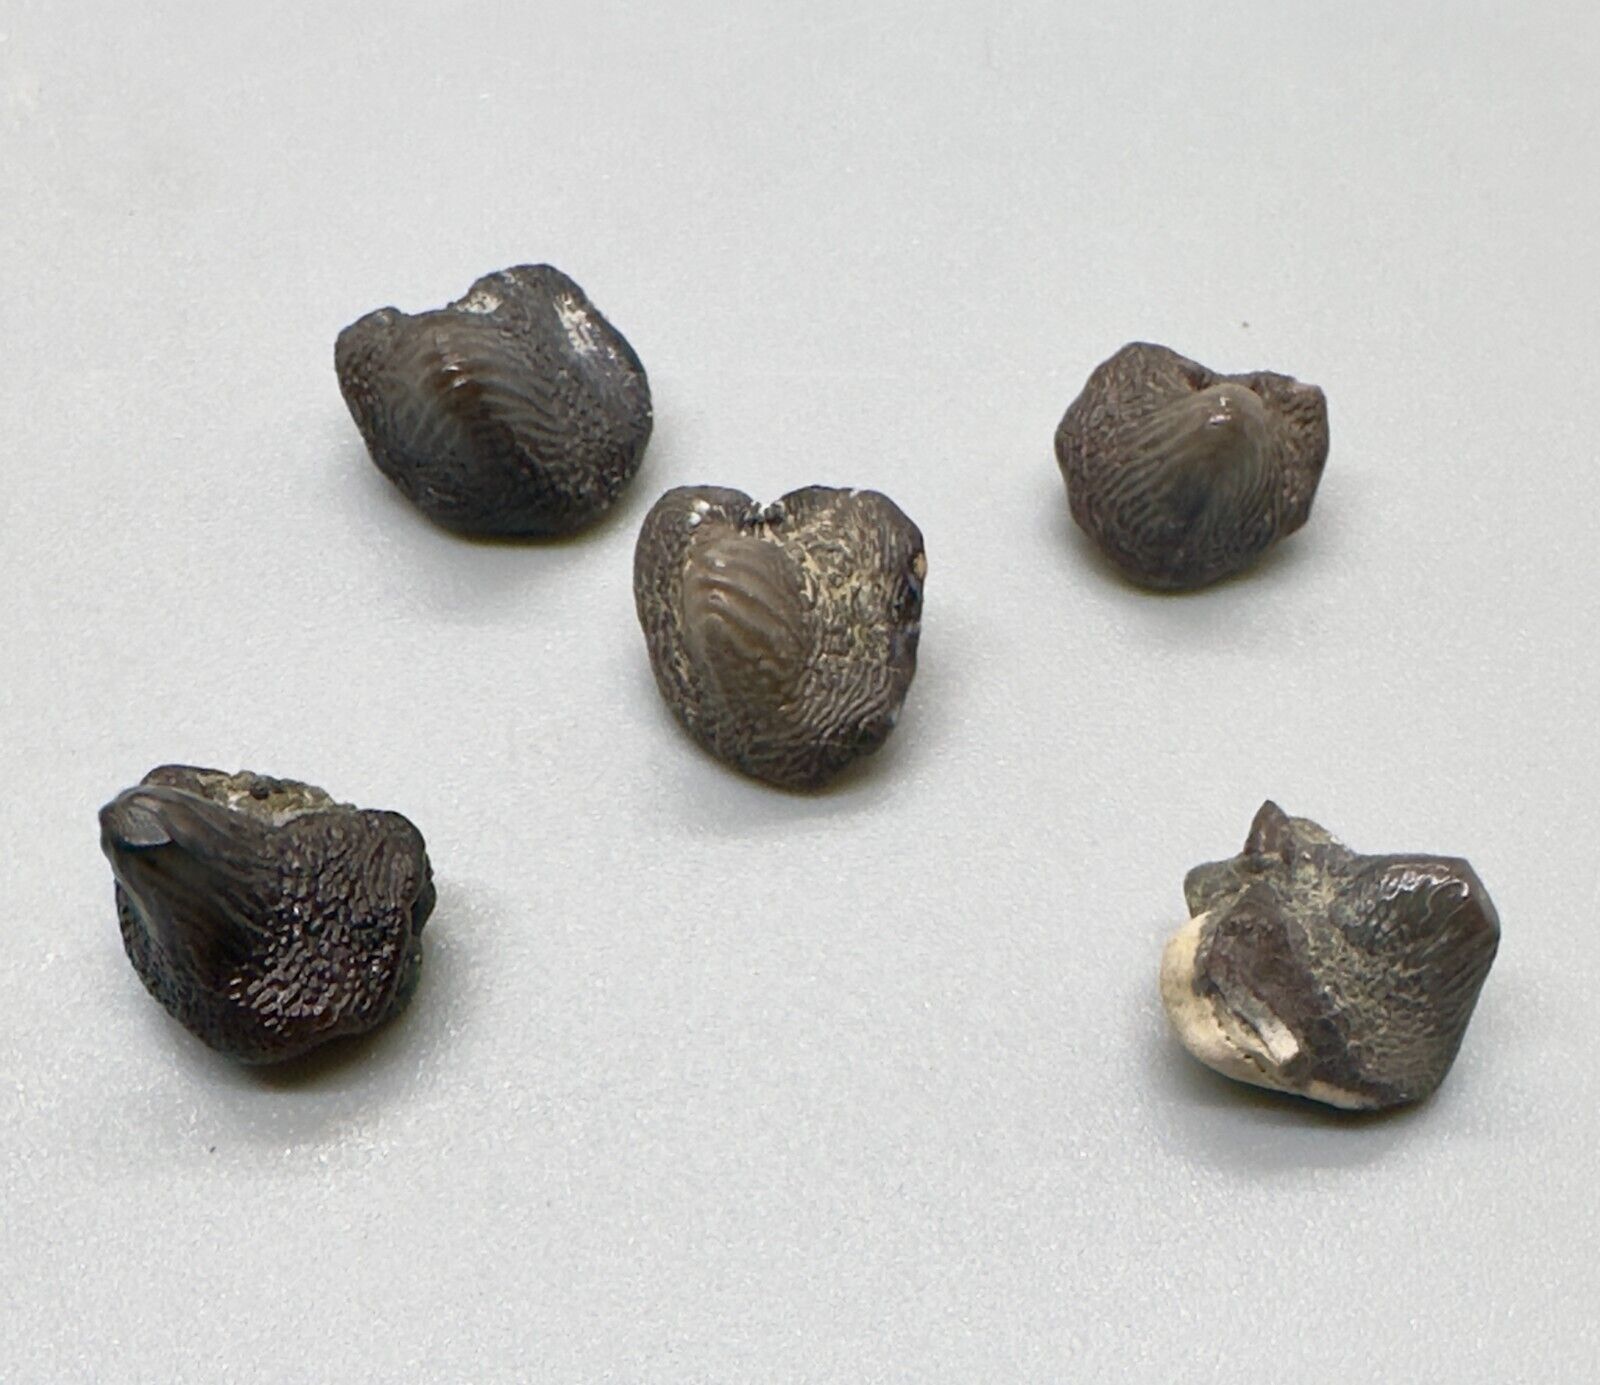 Group of Five Fossil Extinct PTYCHODUS WHIPPLEI Shark Teeth - Dallas Co., TX